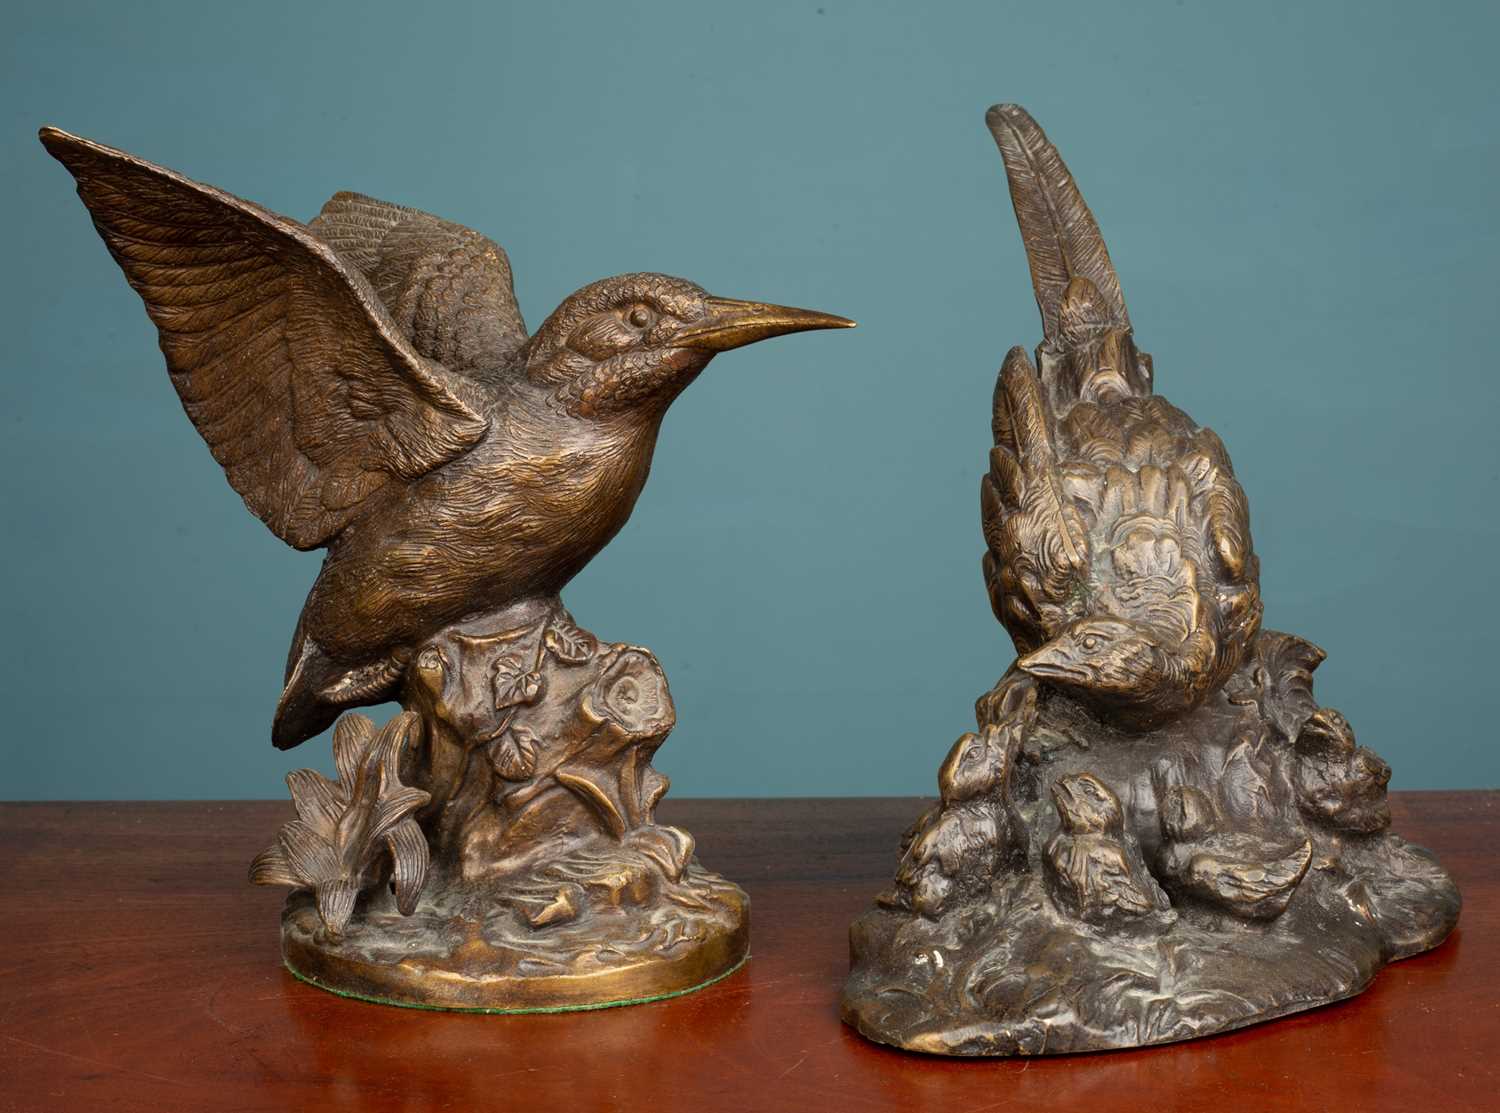 A contemporary bronze sculpture of a Kingfisher and a contemporary bronze sculpture of a Pheasant